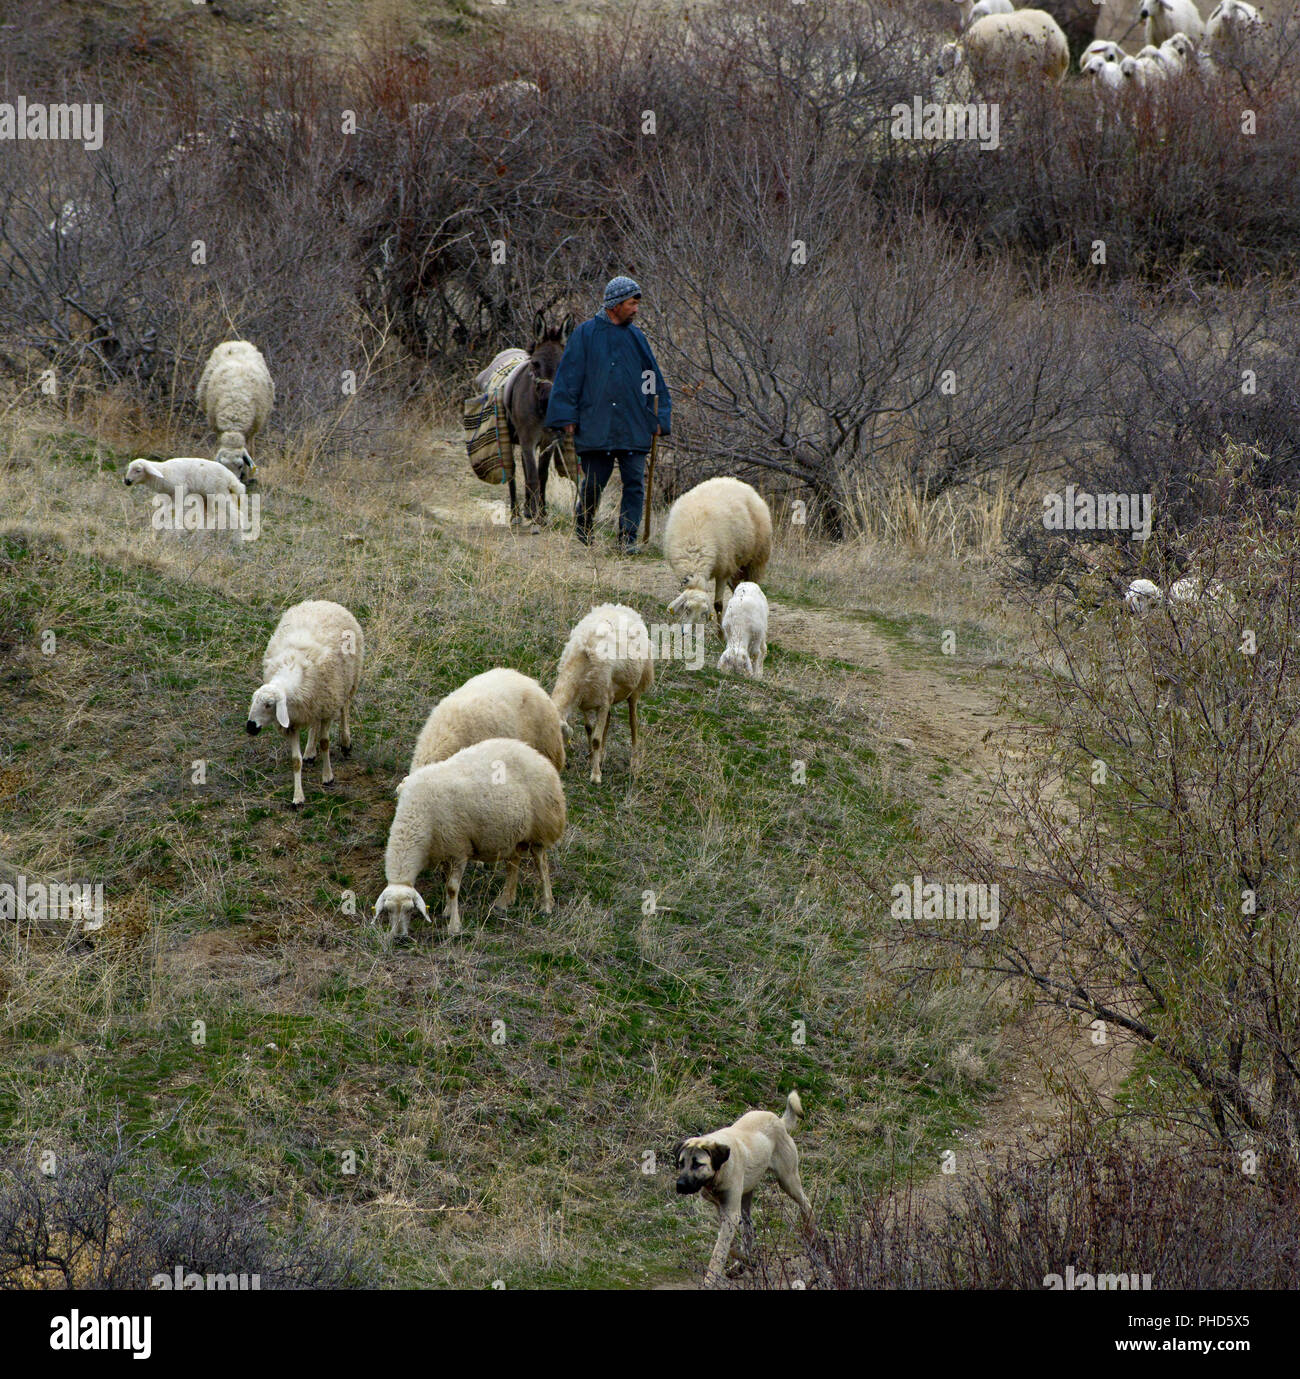 A shepherd with his donkey, Kangal Shepherd dog, and sheep walking through the Love Valley in Cappadocia, Turkey Stock Photo